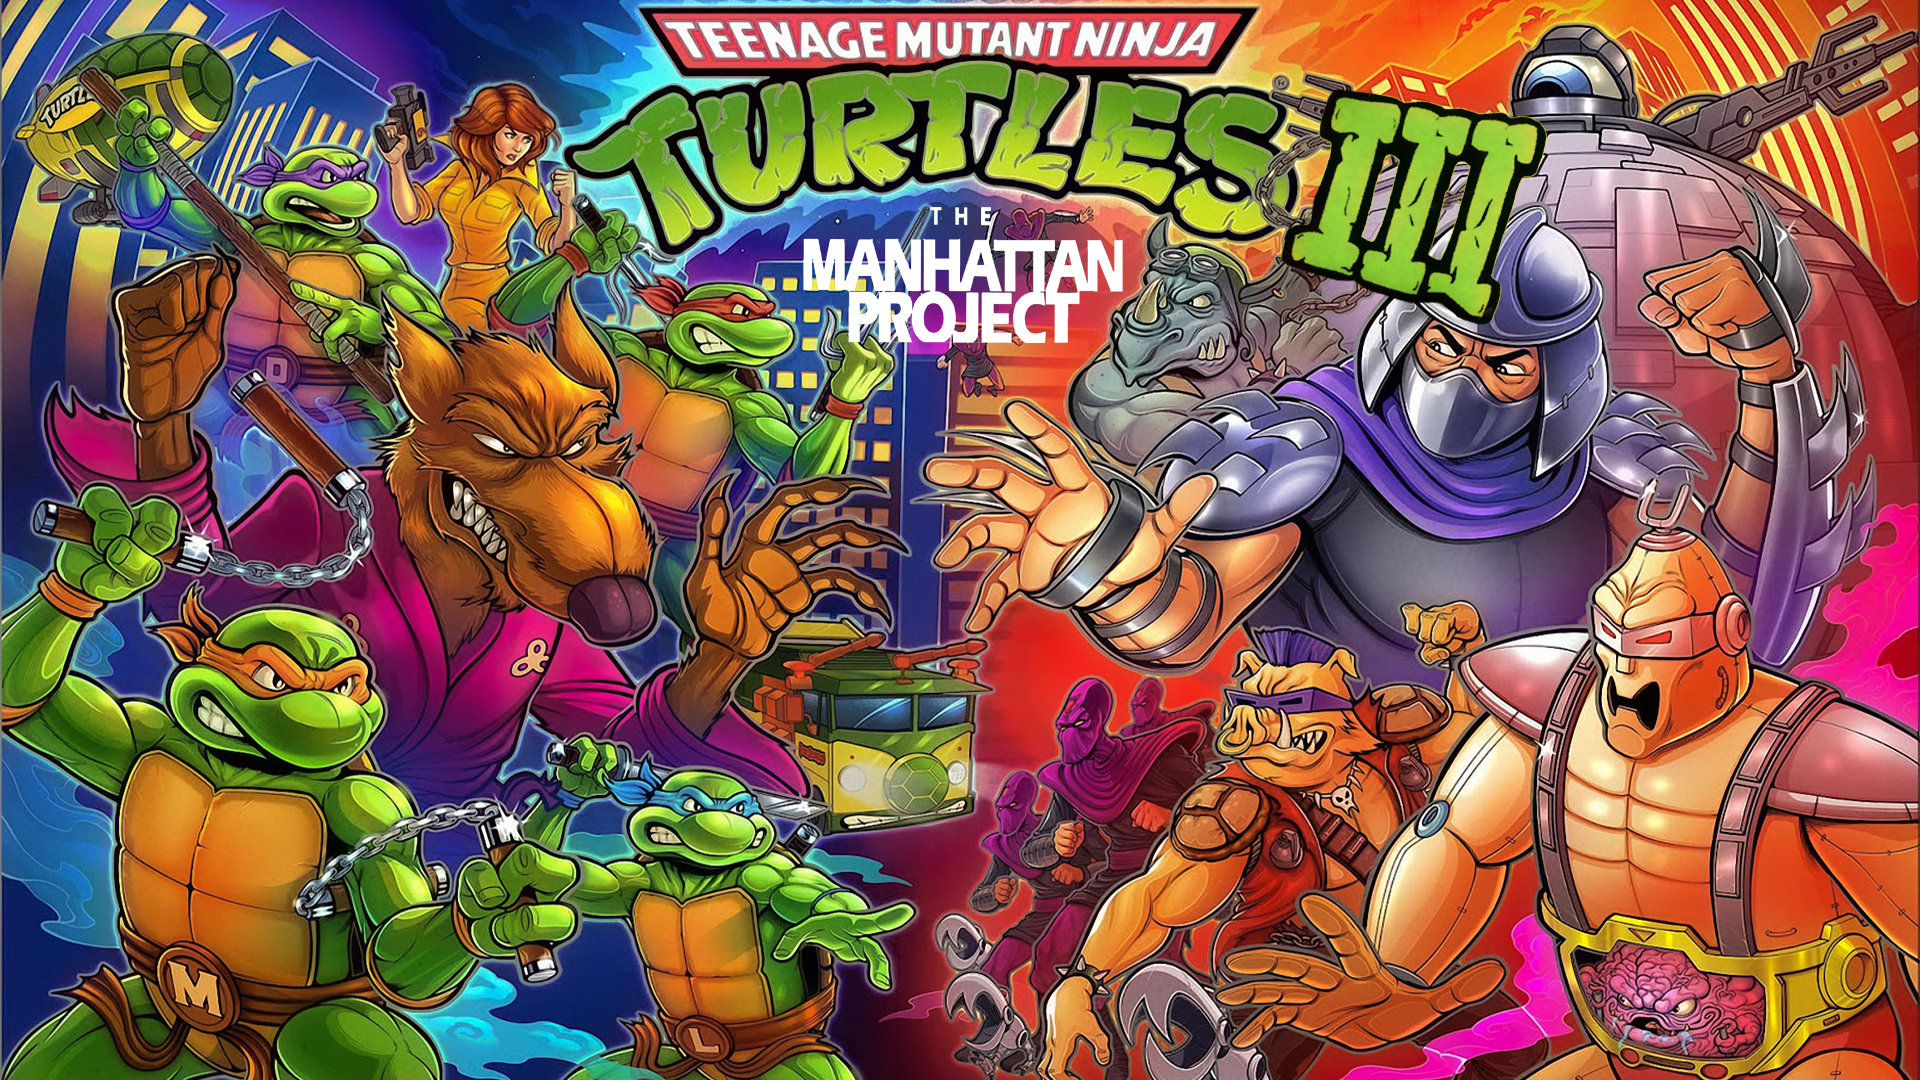 Let’s Play Teenage Mutant Ninja Turtles III: The Manhatten Project (w/ Zazzeris)